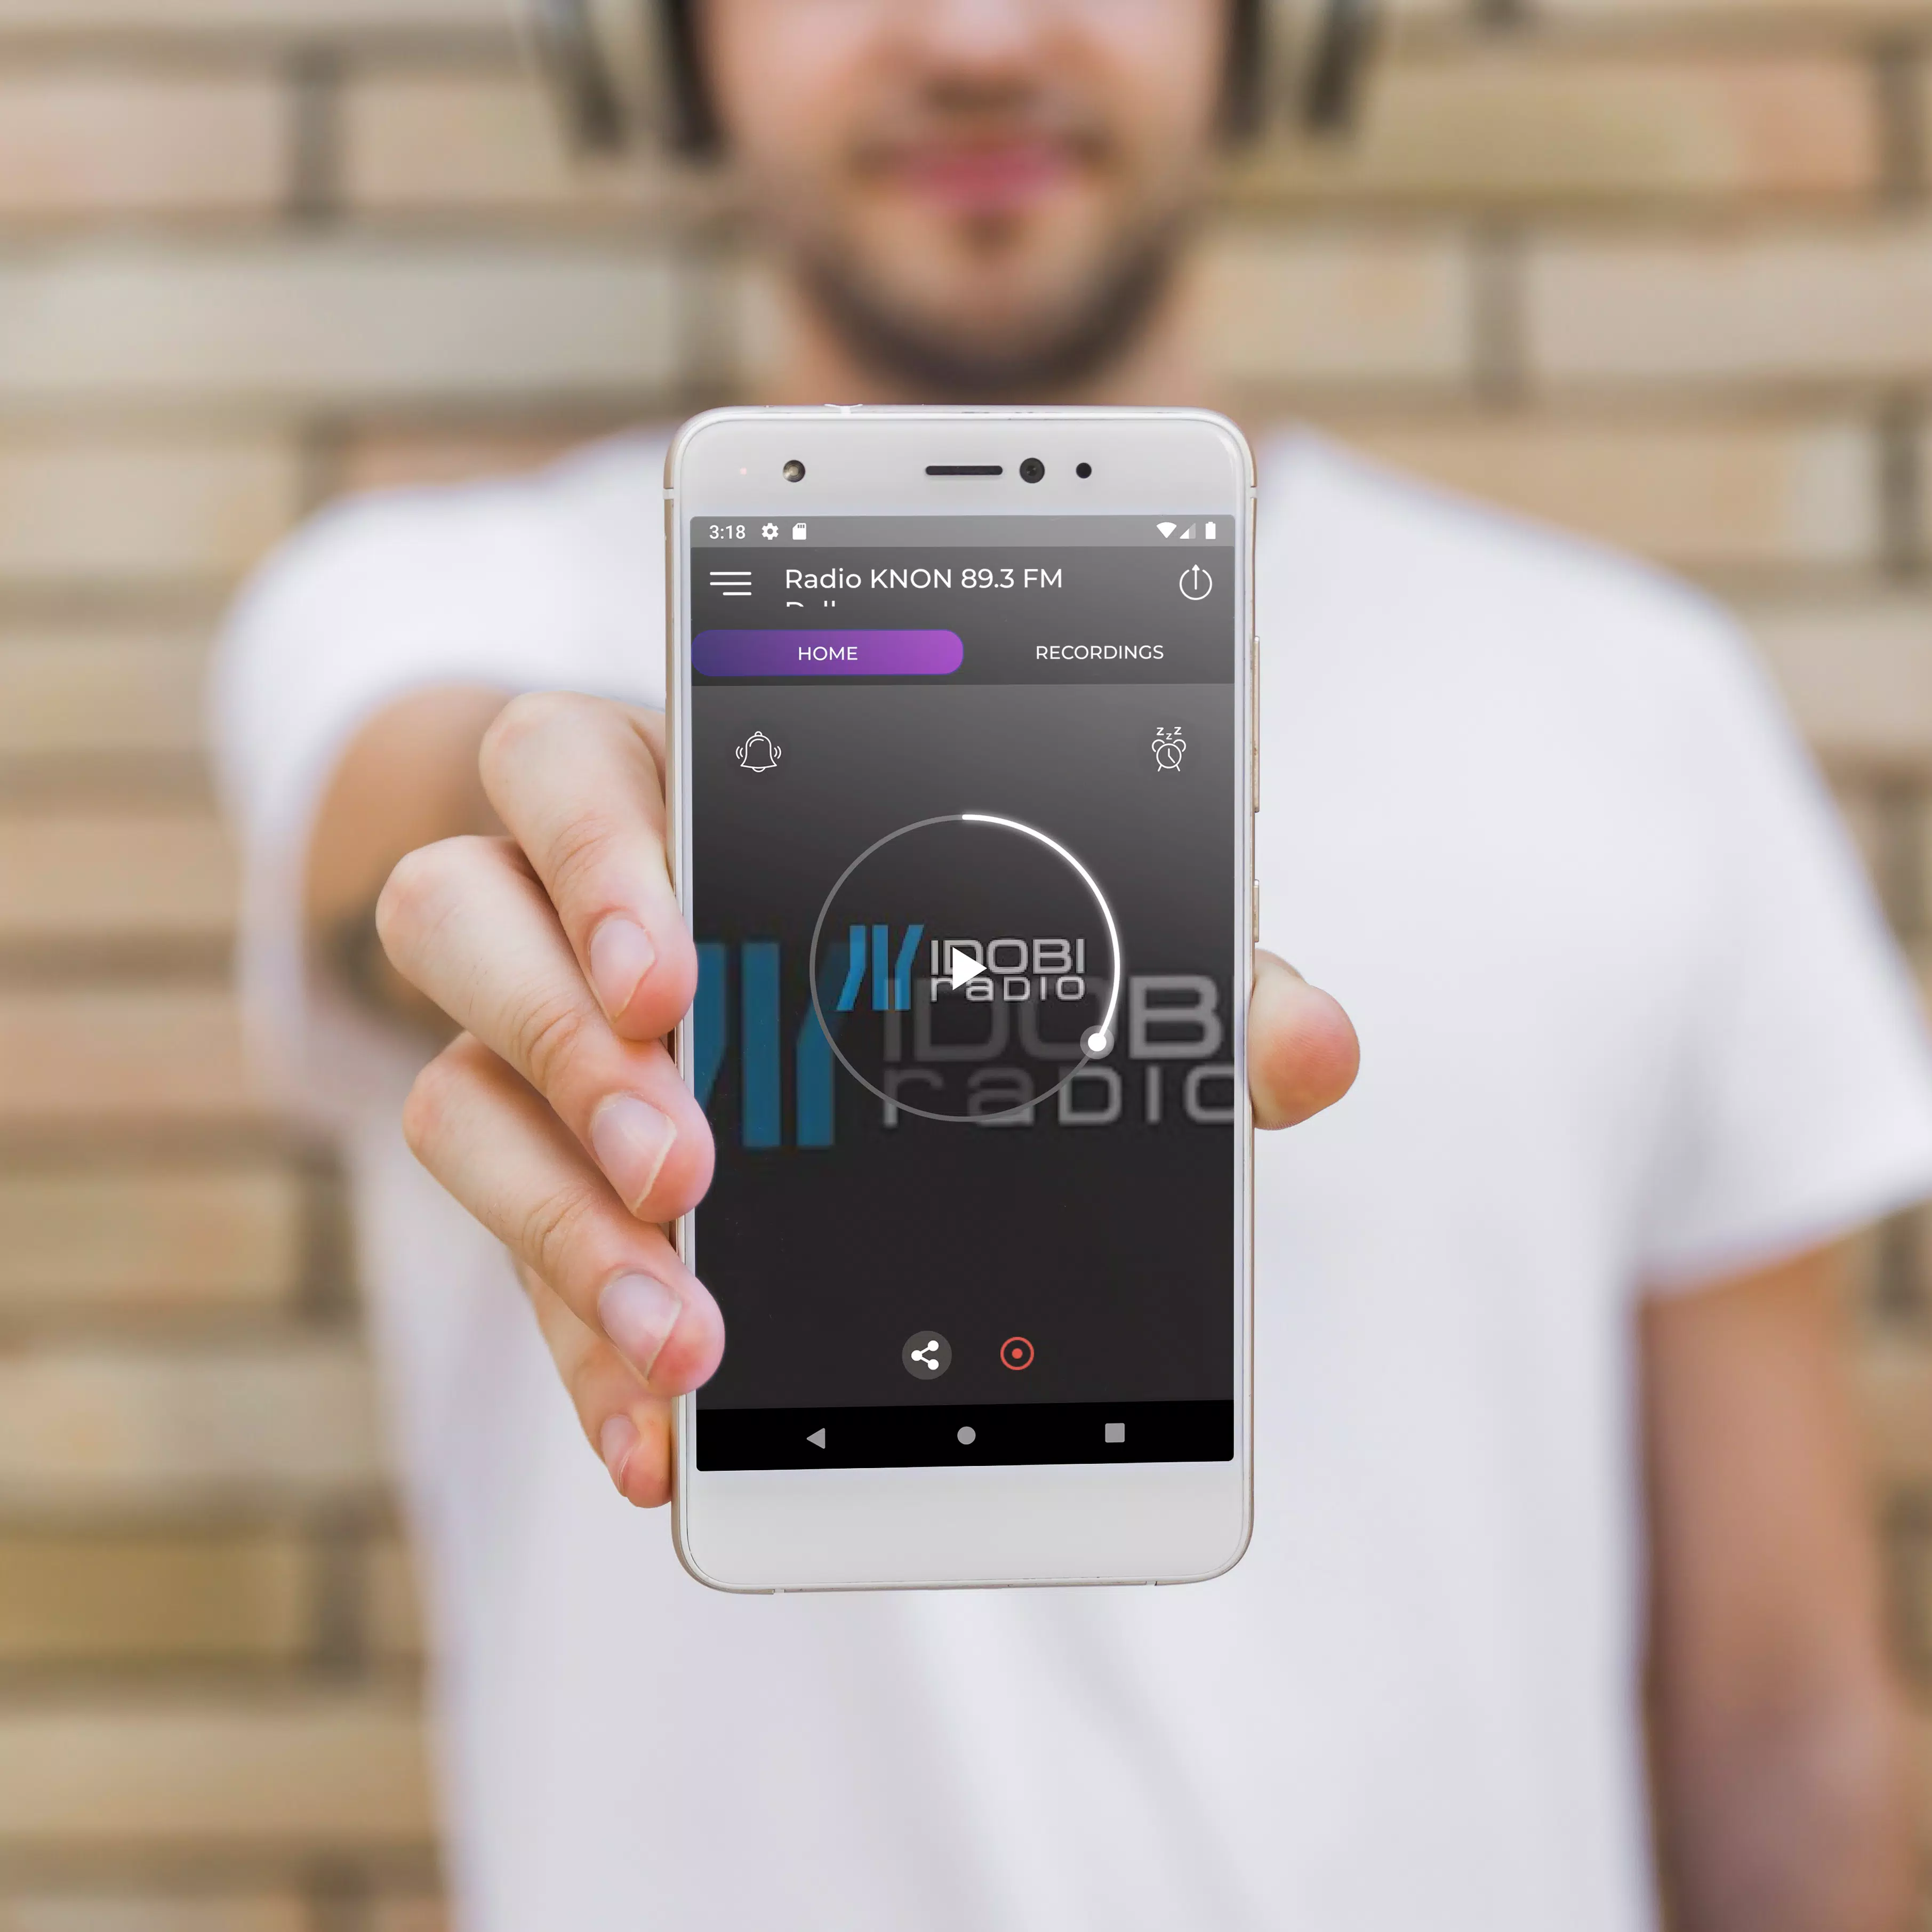 Radio KNON 89.3 FM Dallas App Station Free Online安卓版应用APK下载